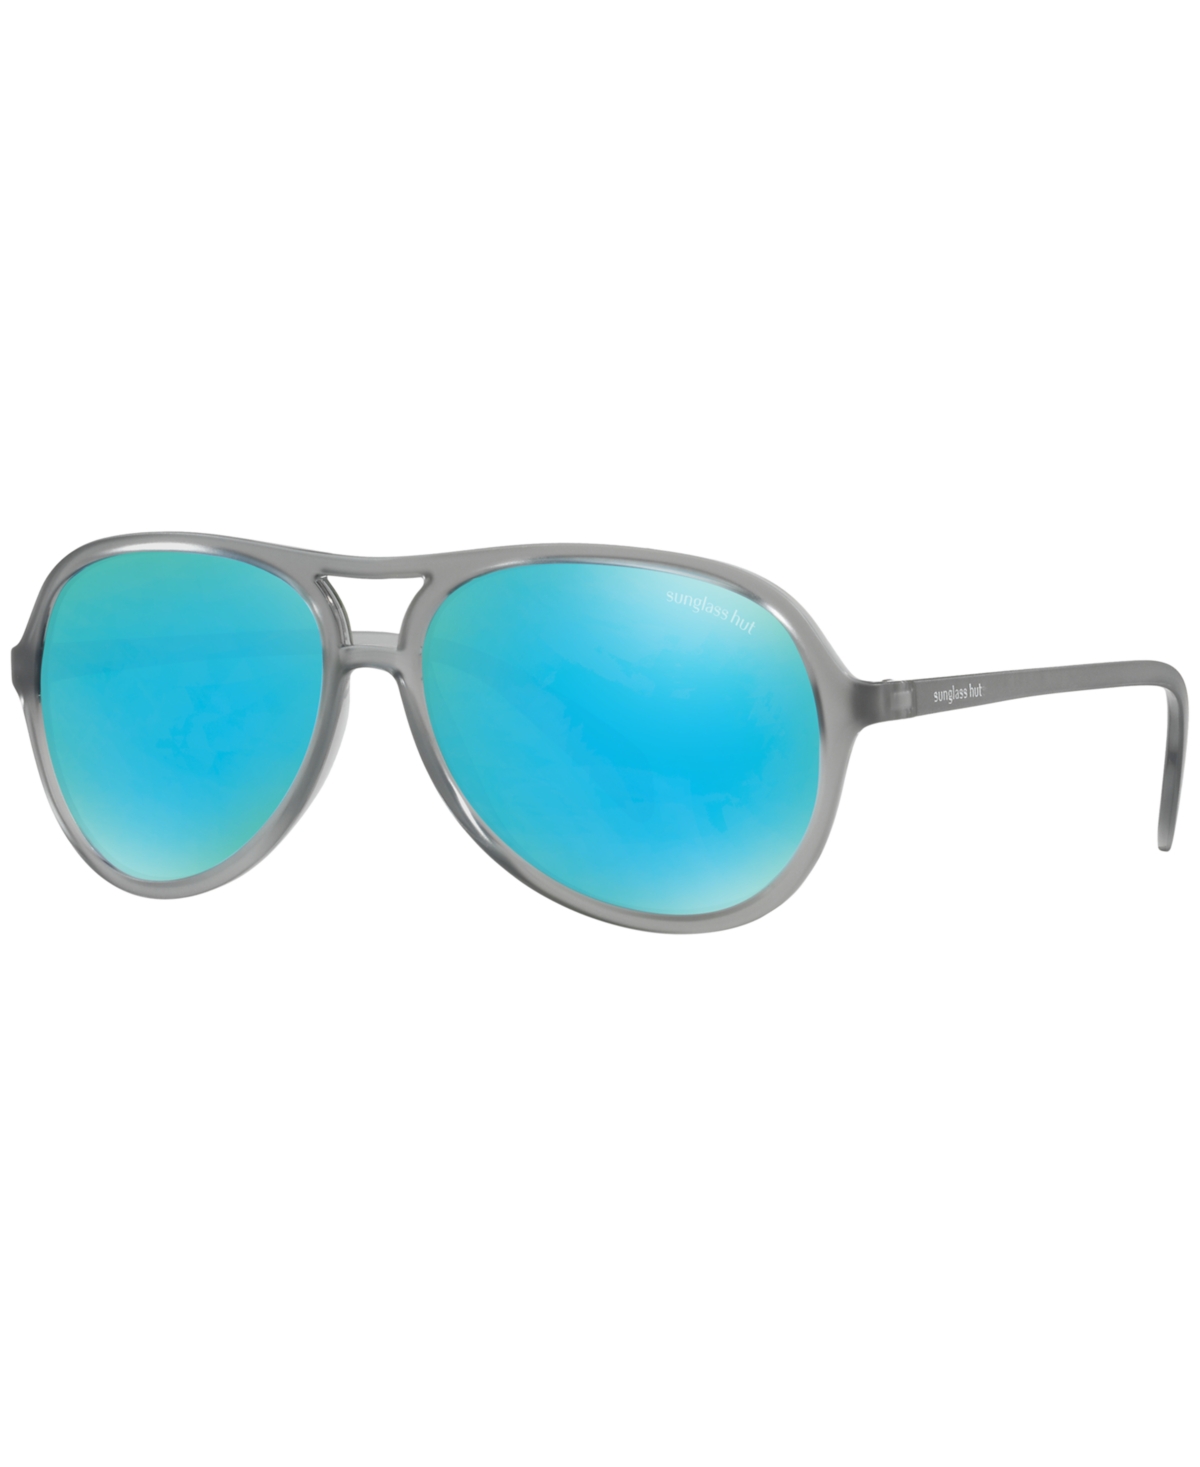 Sunglasses, HU2005 57 - GREY/GREEN MIRROR